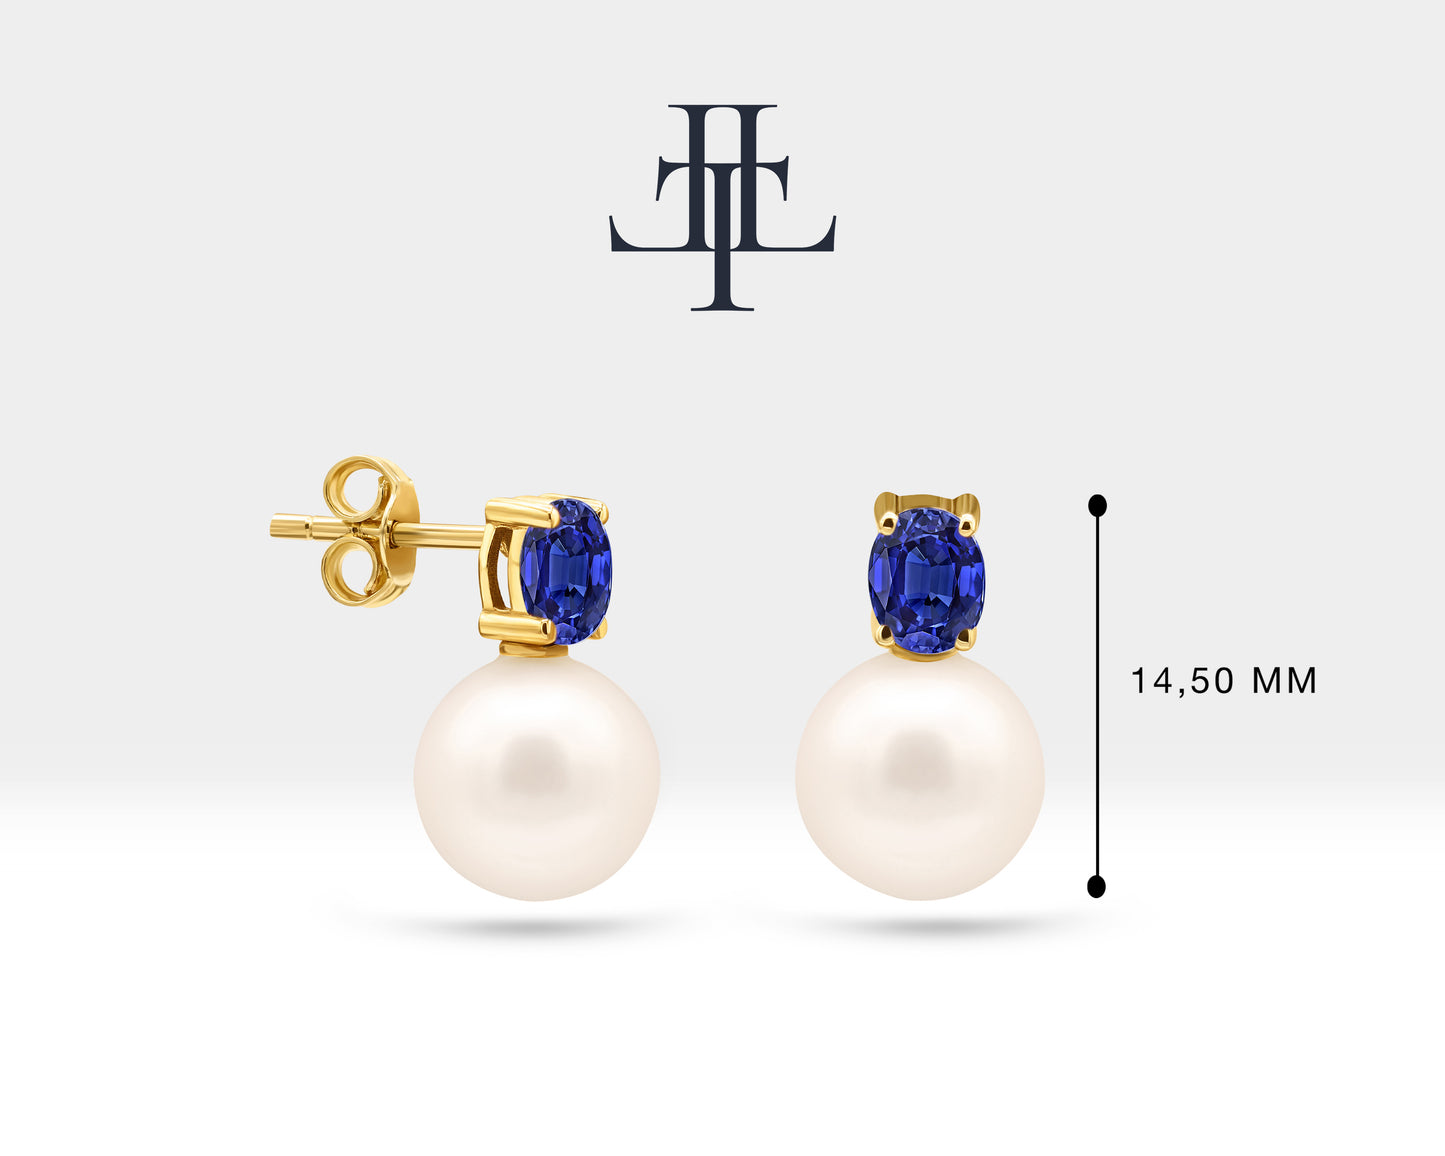 Pearl Earrings with Oval Cut Sapphire Earring in 14K Solid Gold Stud Earrings for Women Wedding Jewelry | LES00005PS